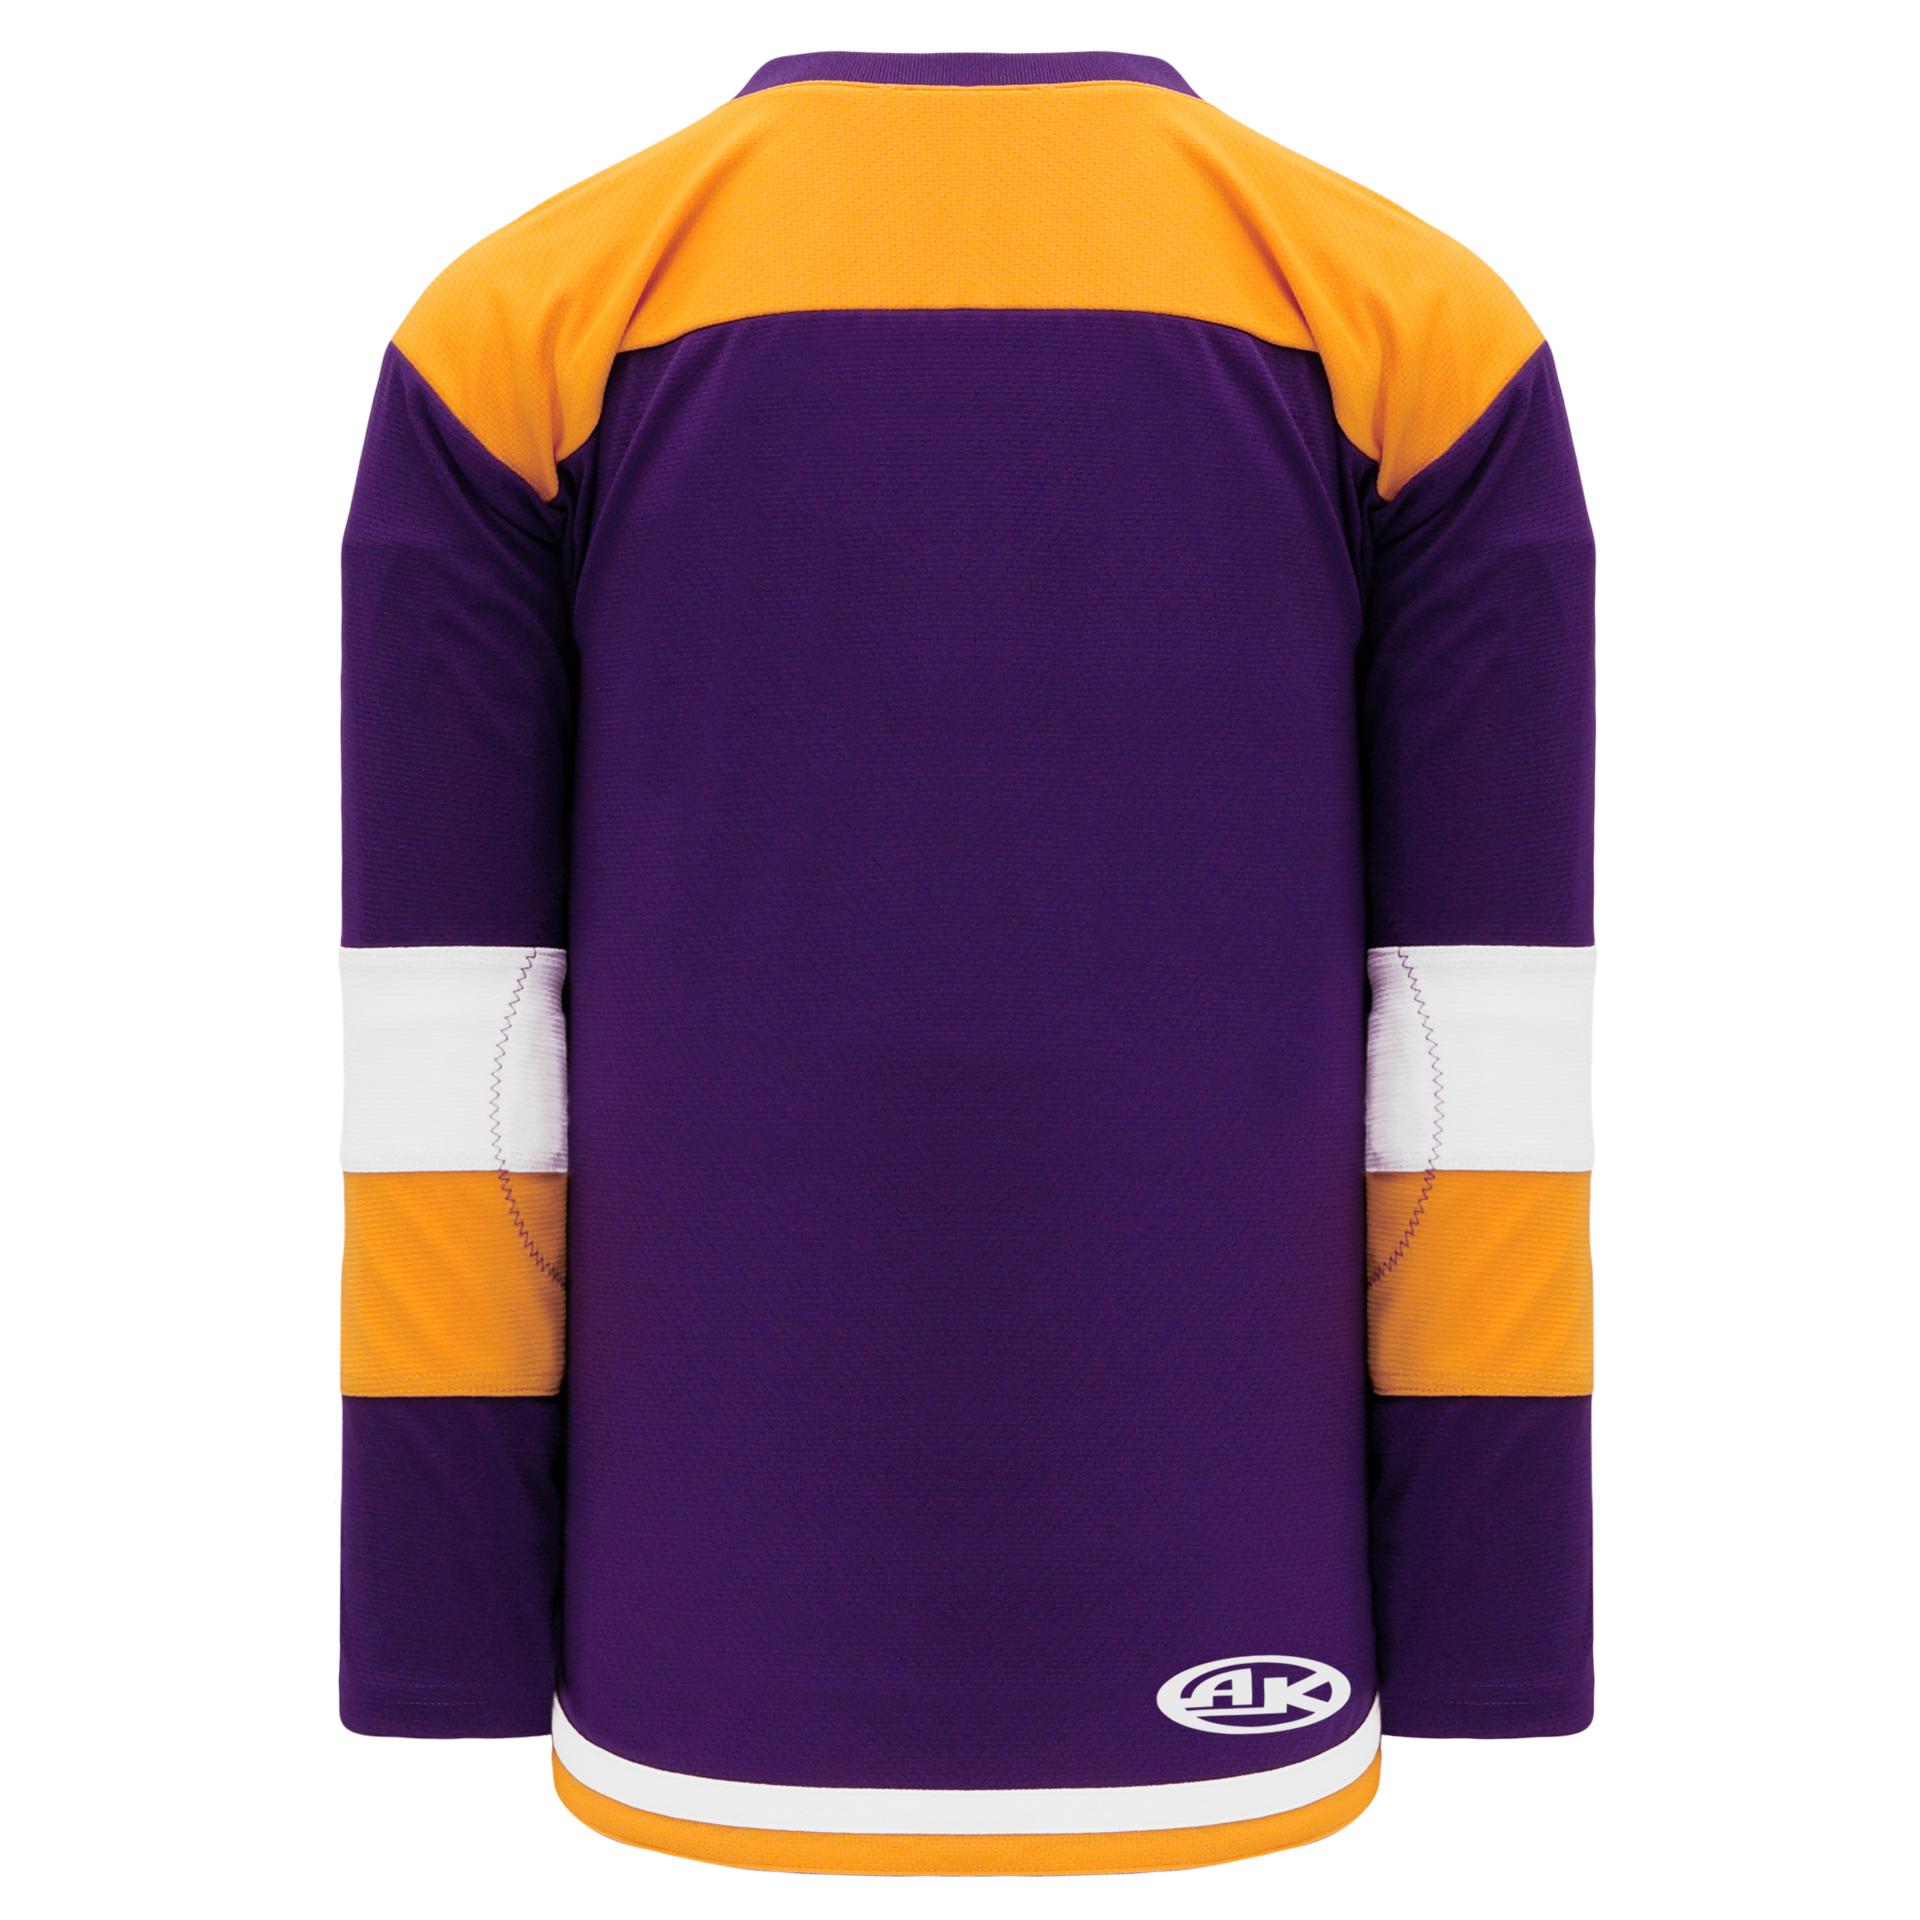 Kobe 5200 House League Hockey Jersey - Purple Gold White